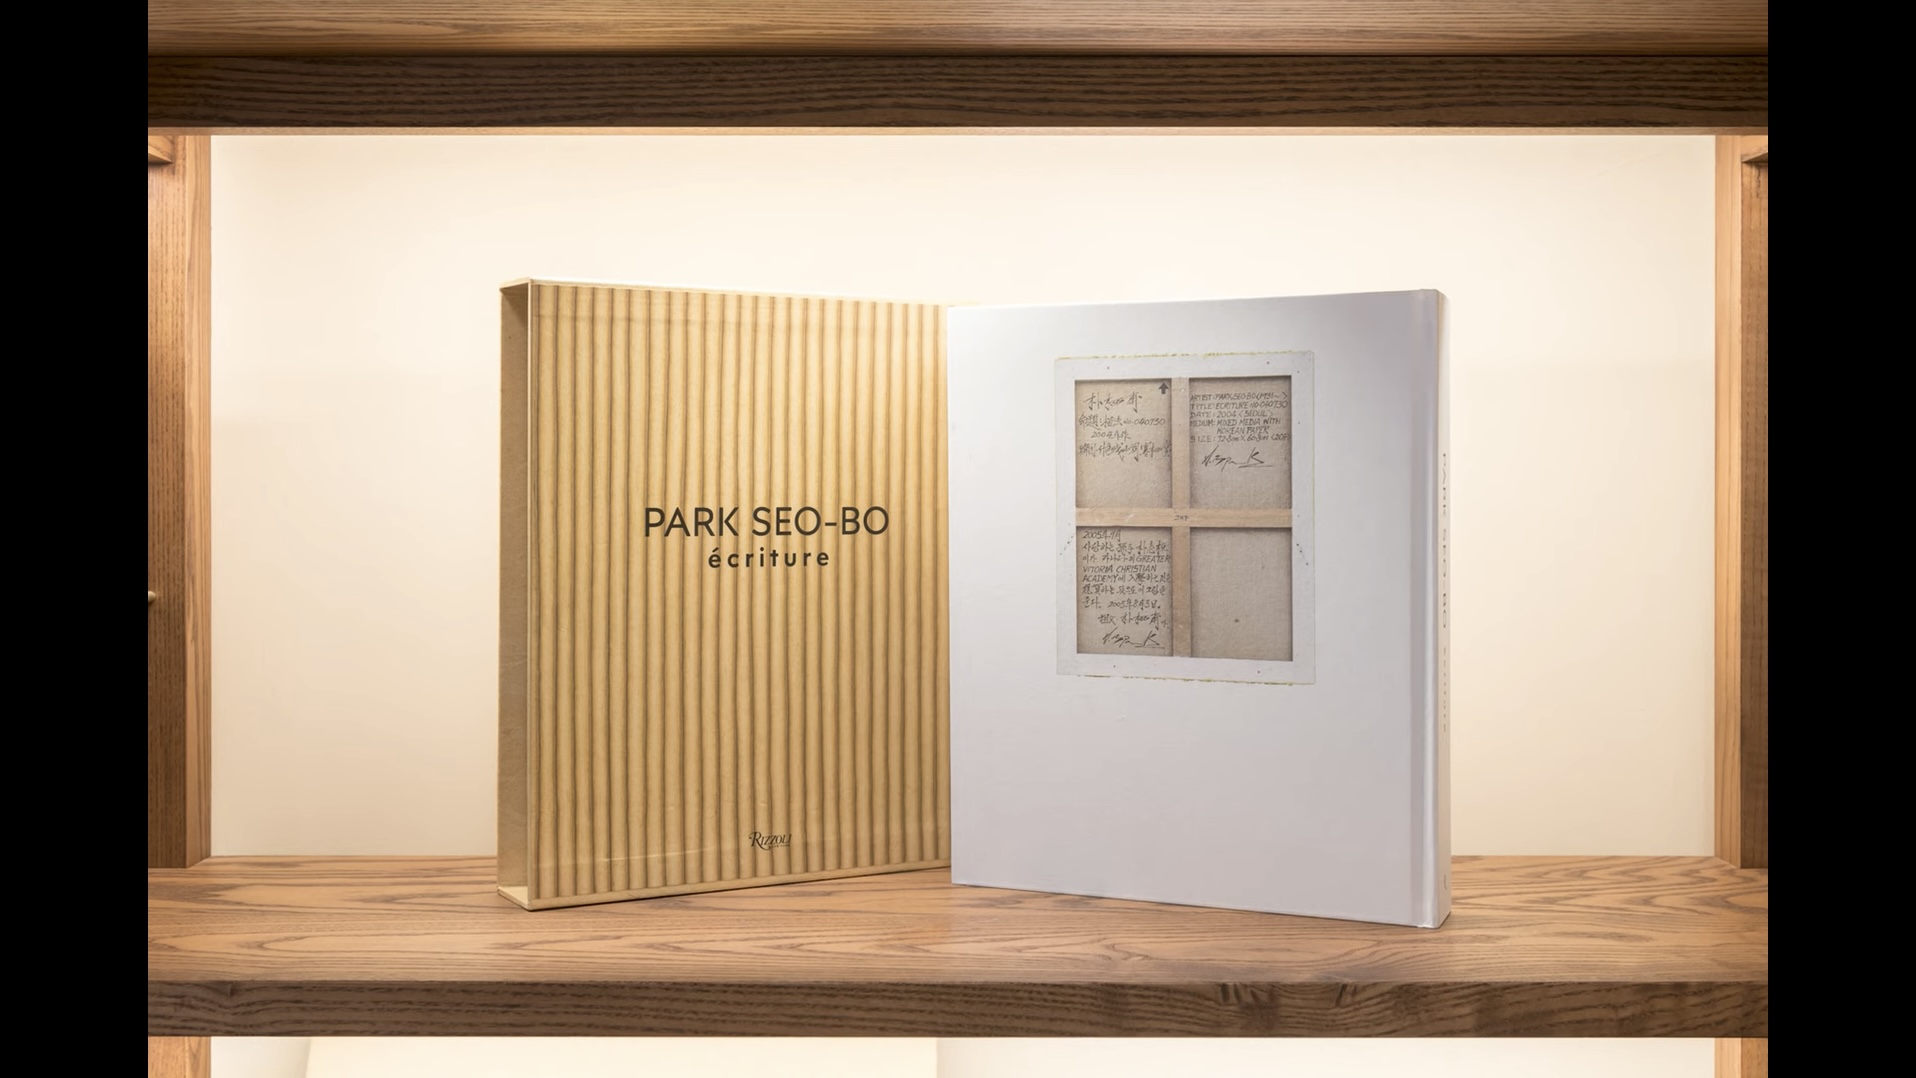 Perrotin - Save the date! Park Seo-Bo's a solo exhibition